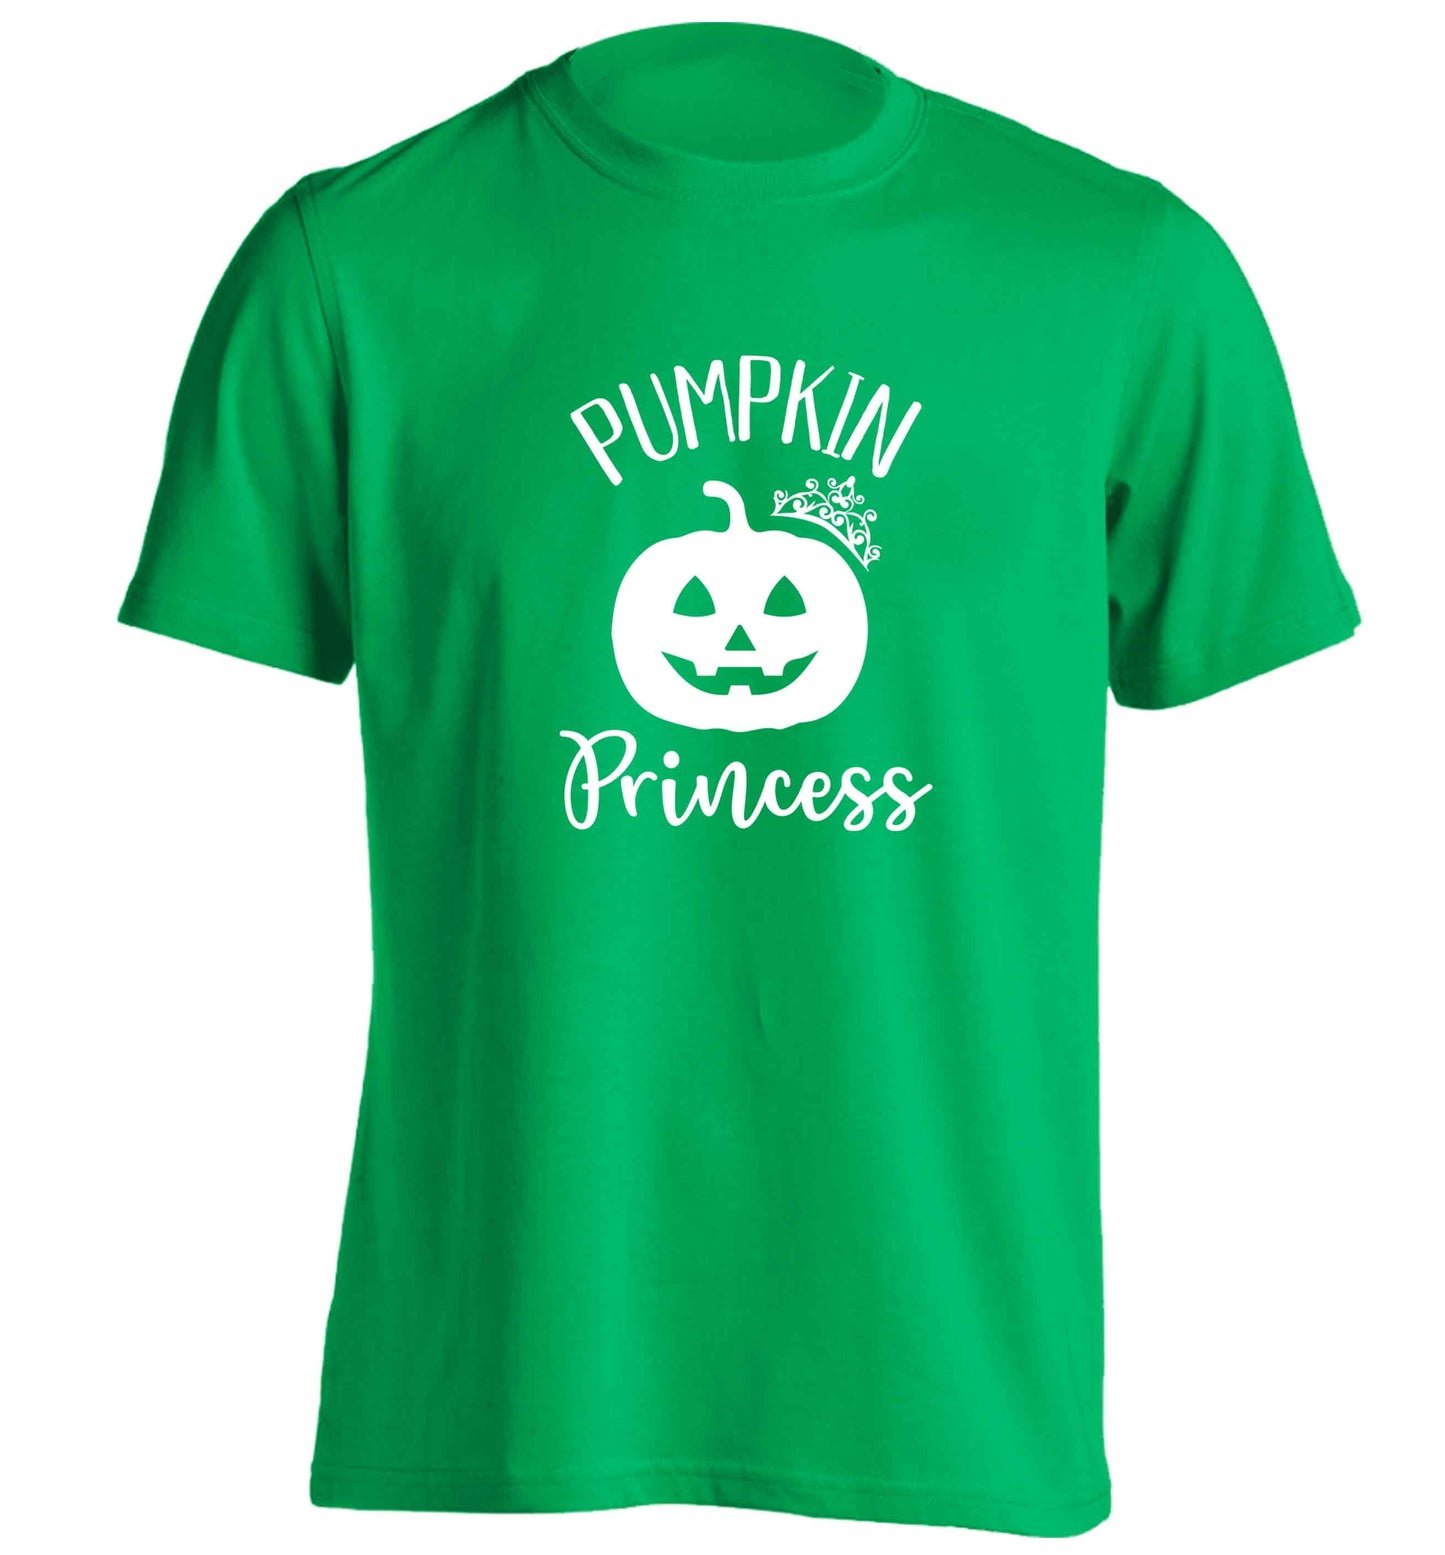 Happiness Pumpkin Spice adults unisex green Tshirt 2XL